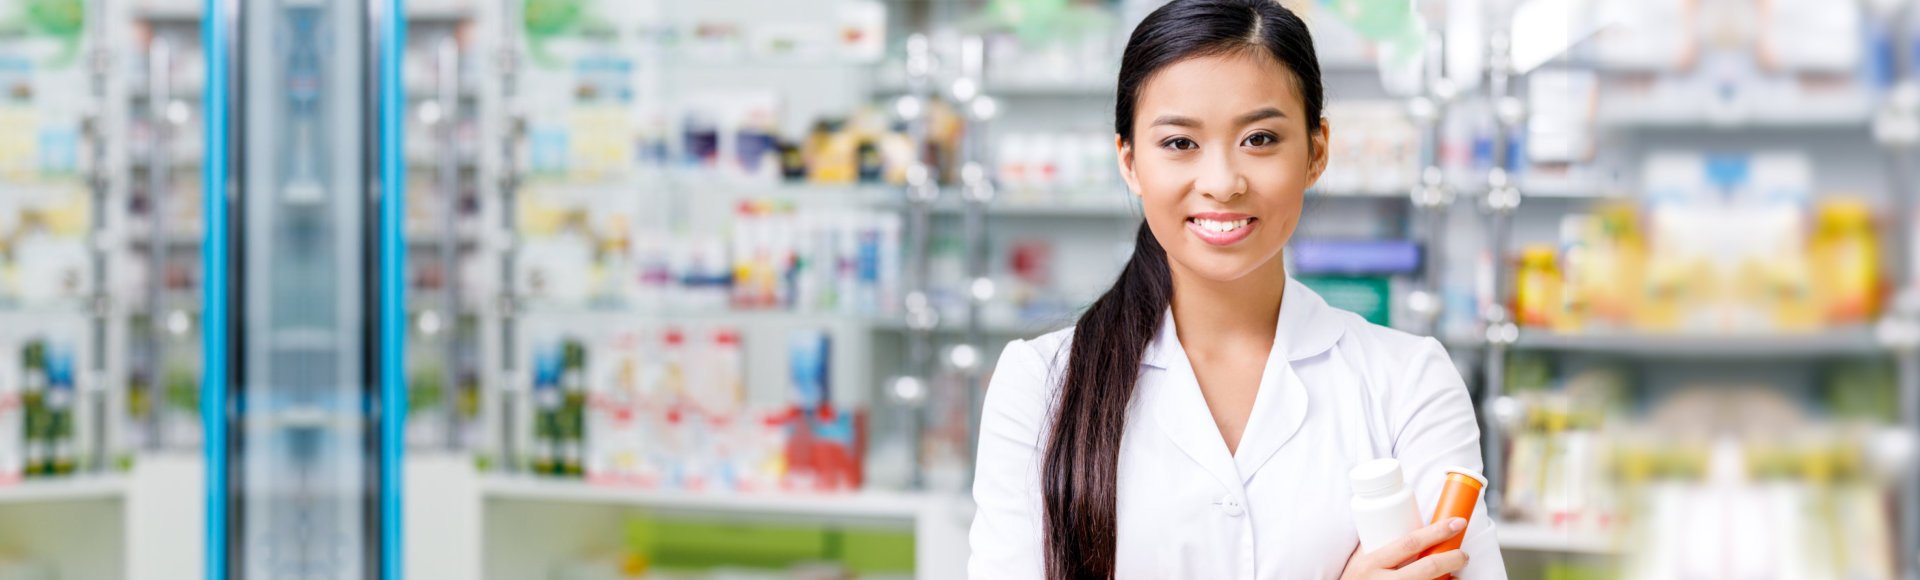 portrait of a pharmacist